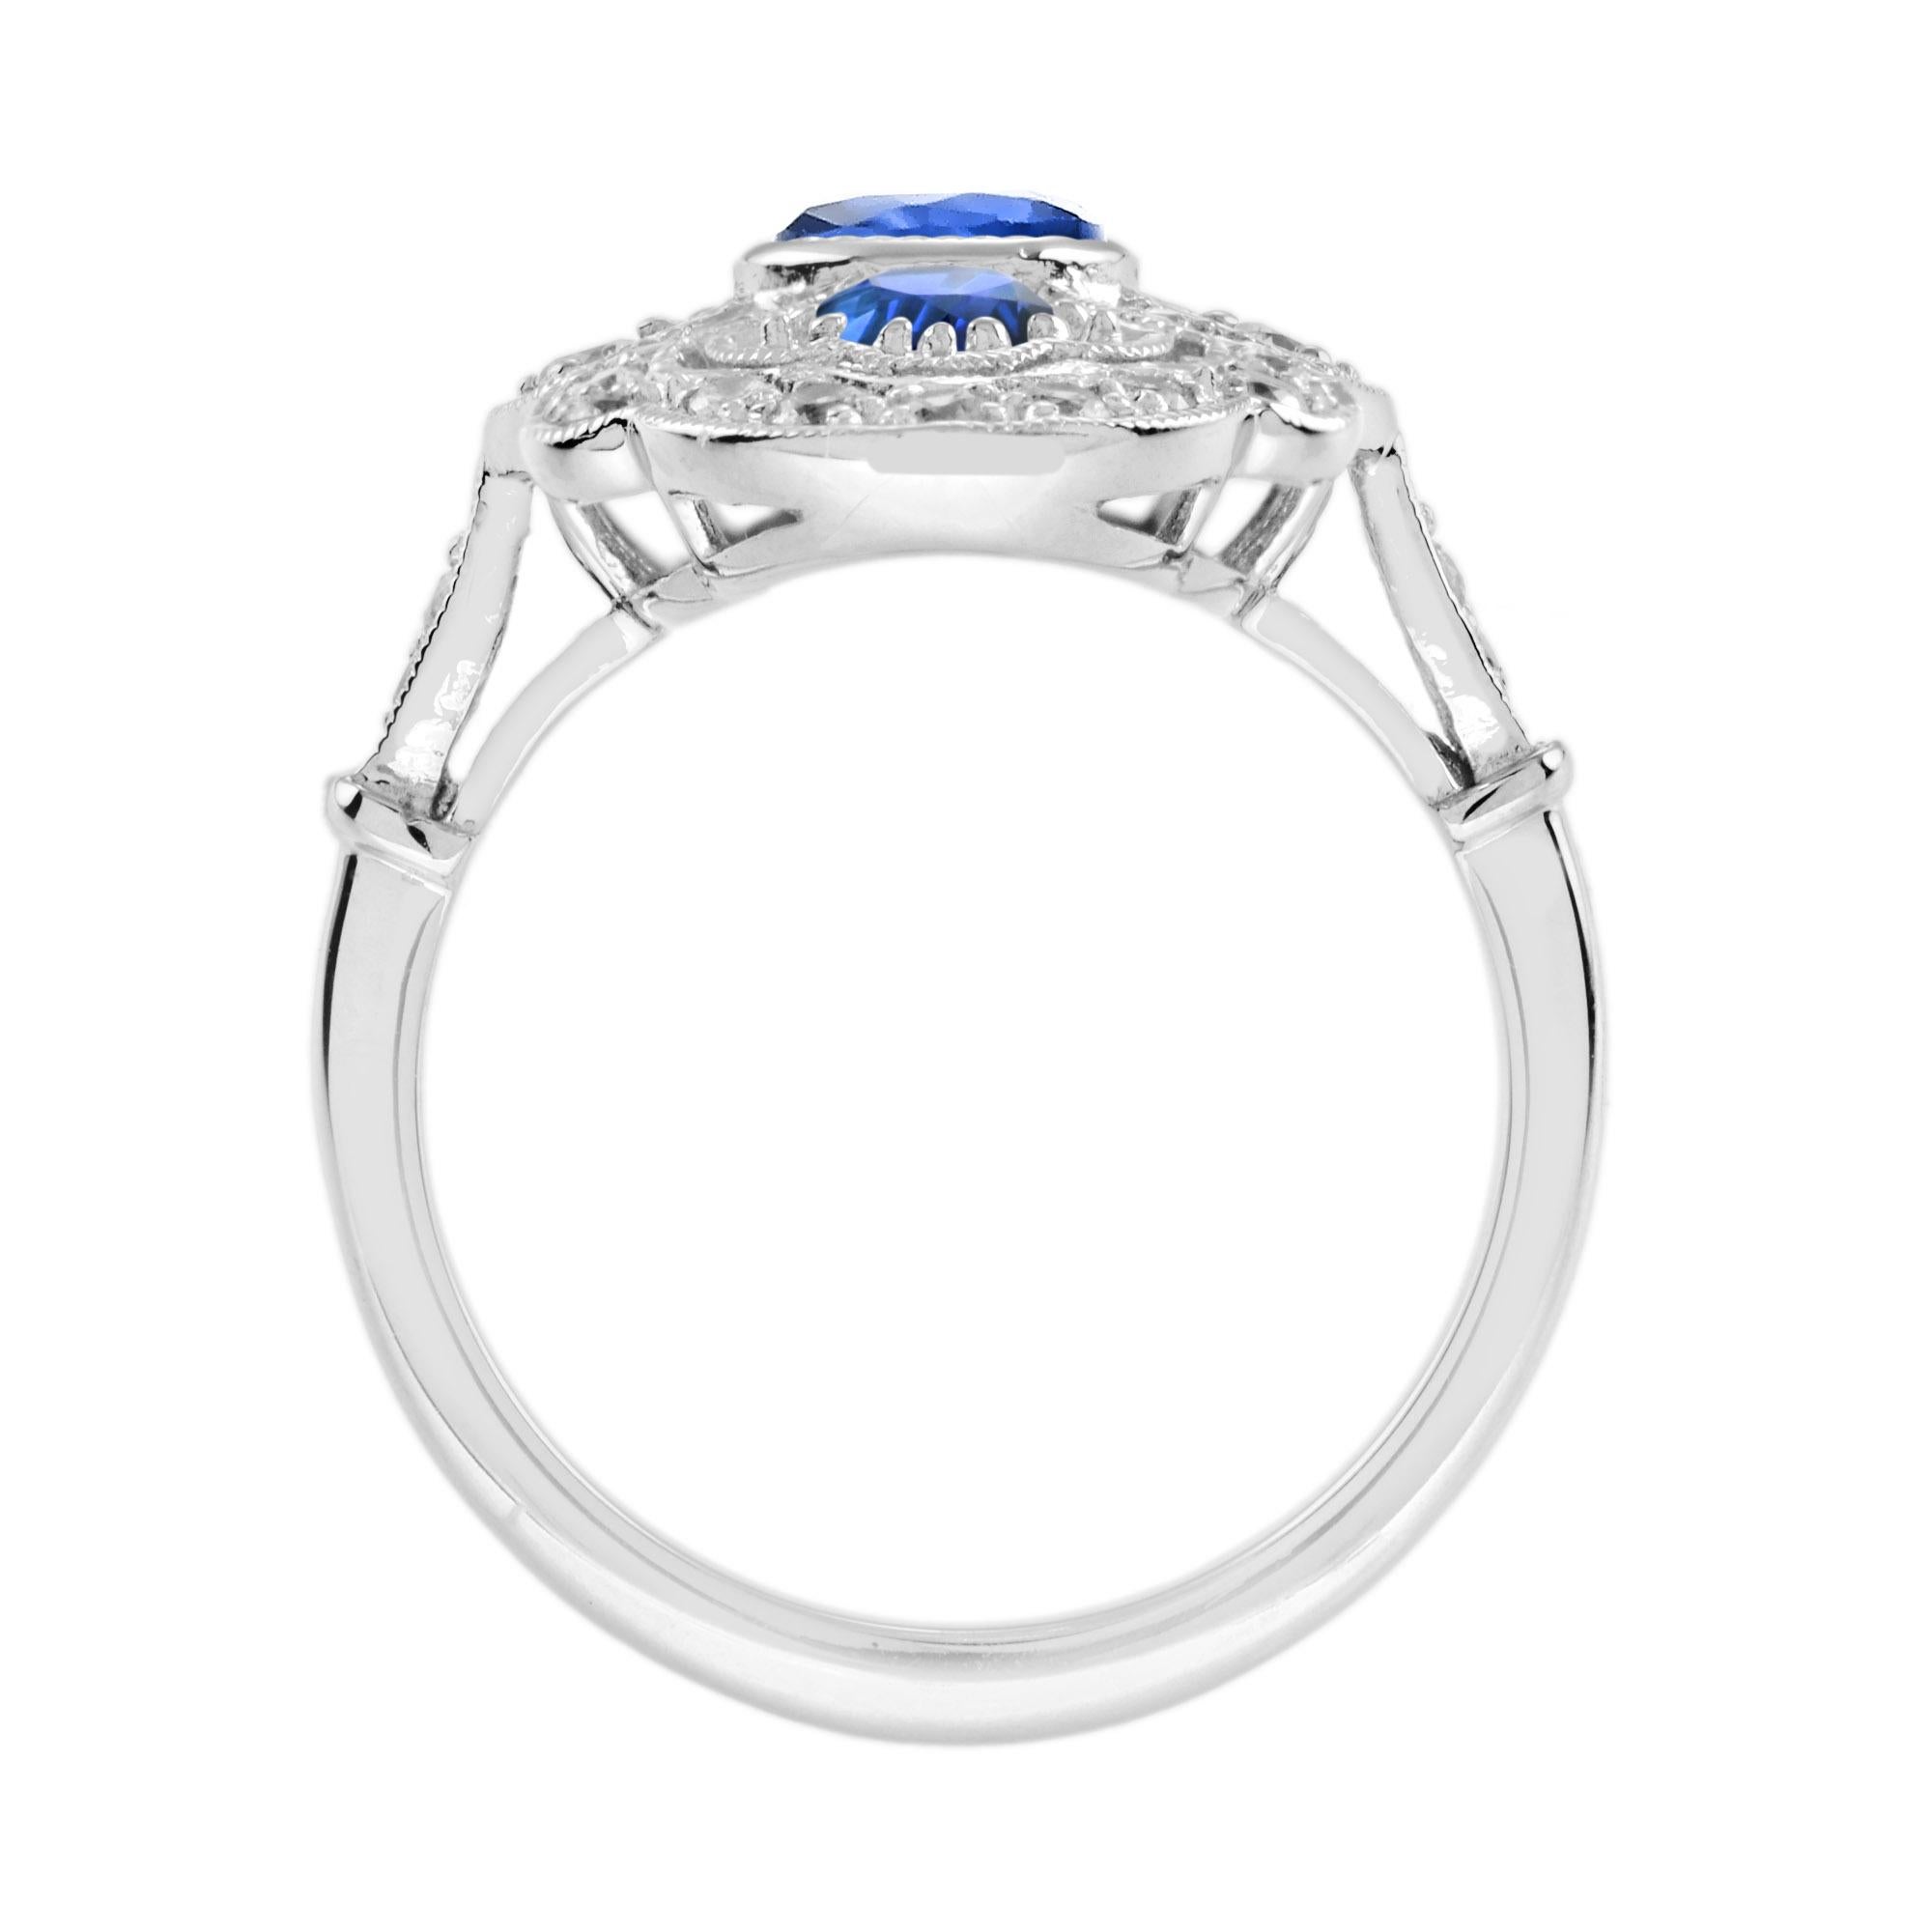 For Sale:  Ceylon Sapphire Diamond Art Deco Style Three Stone Dinner Ring in 18K White Gold 6